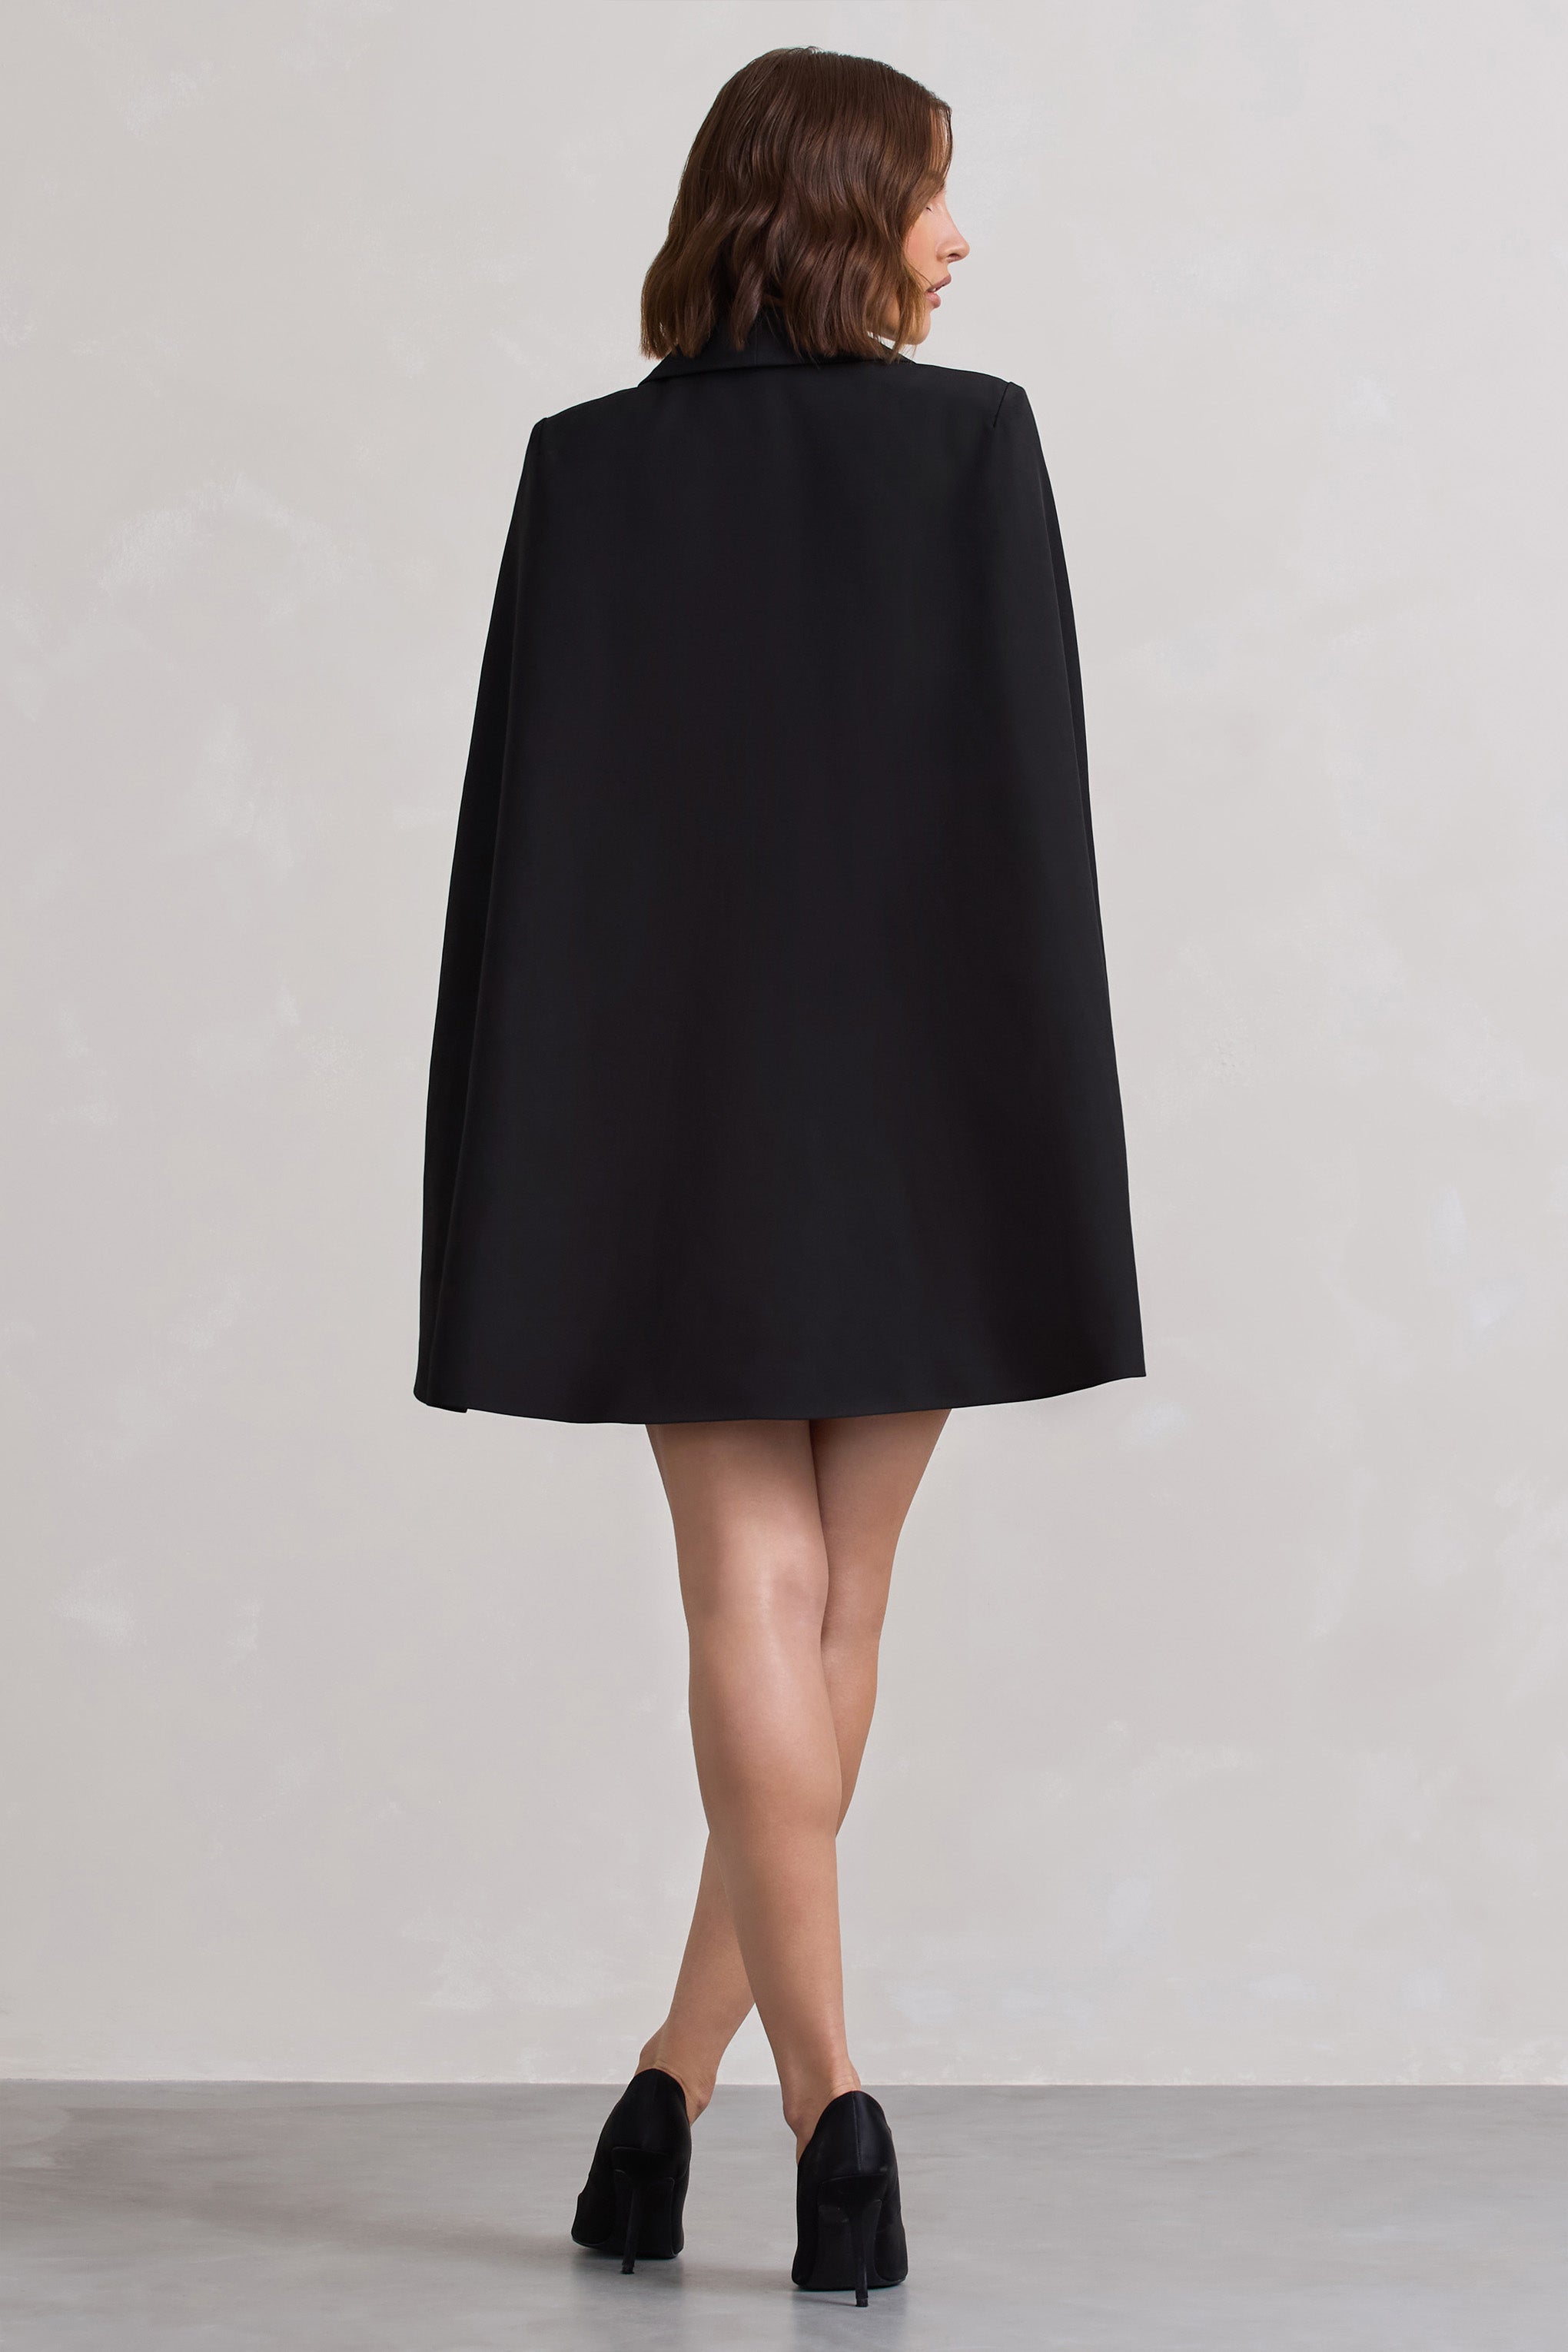 Suri Black Tailored Cape Blazer Dress